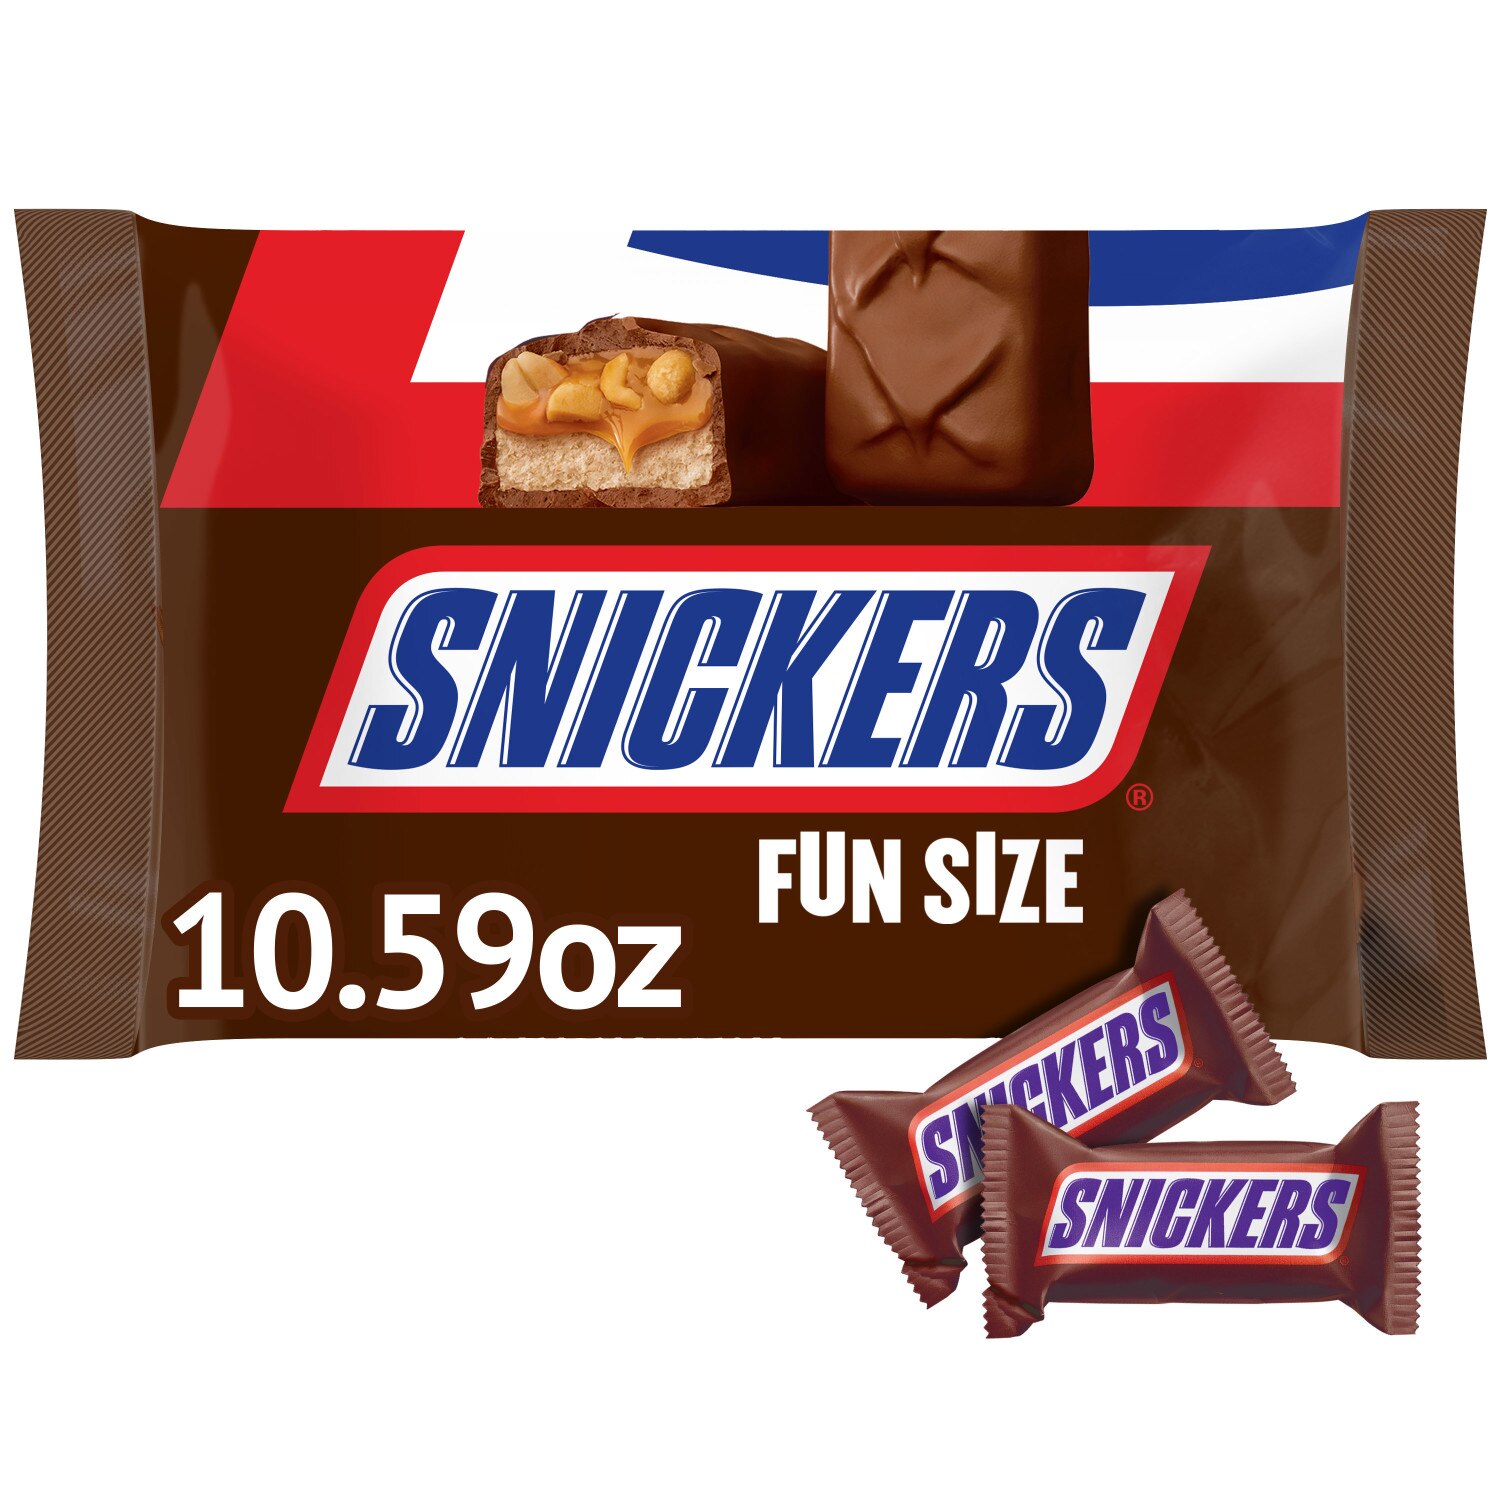 Snickers Chocolate Candy Bars Fun Size 10 59 Oz Cvs Pharmacy